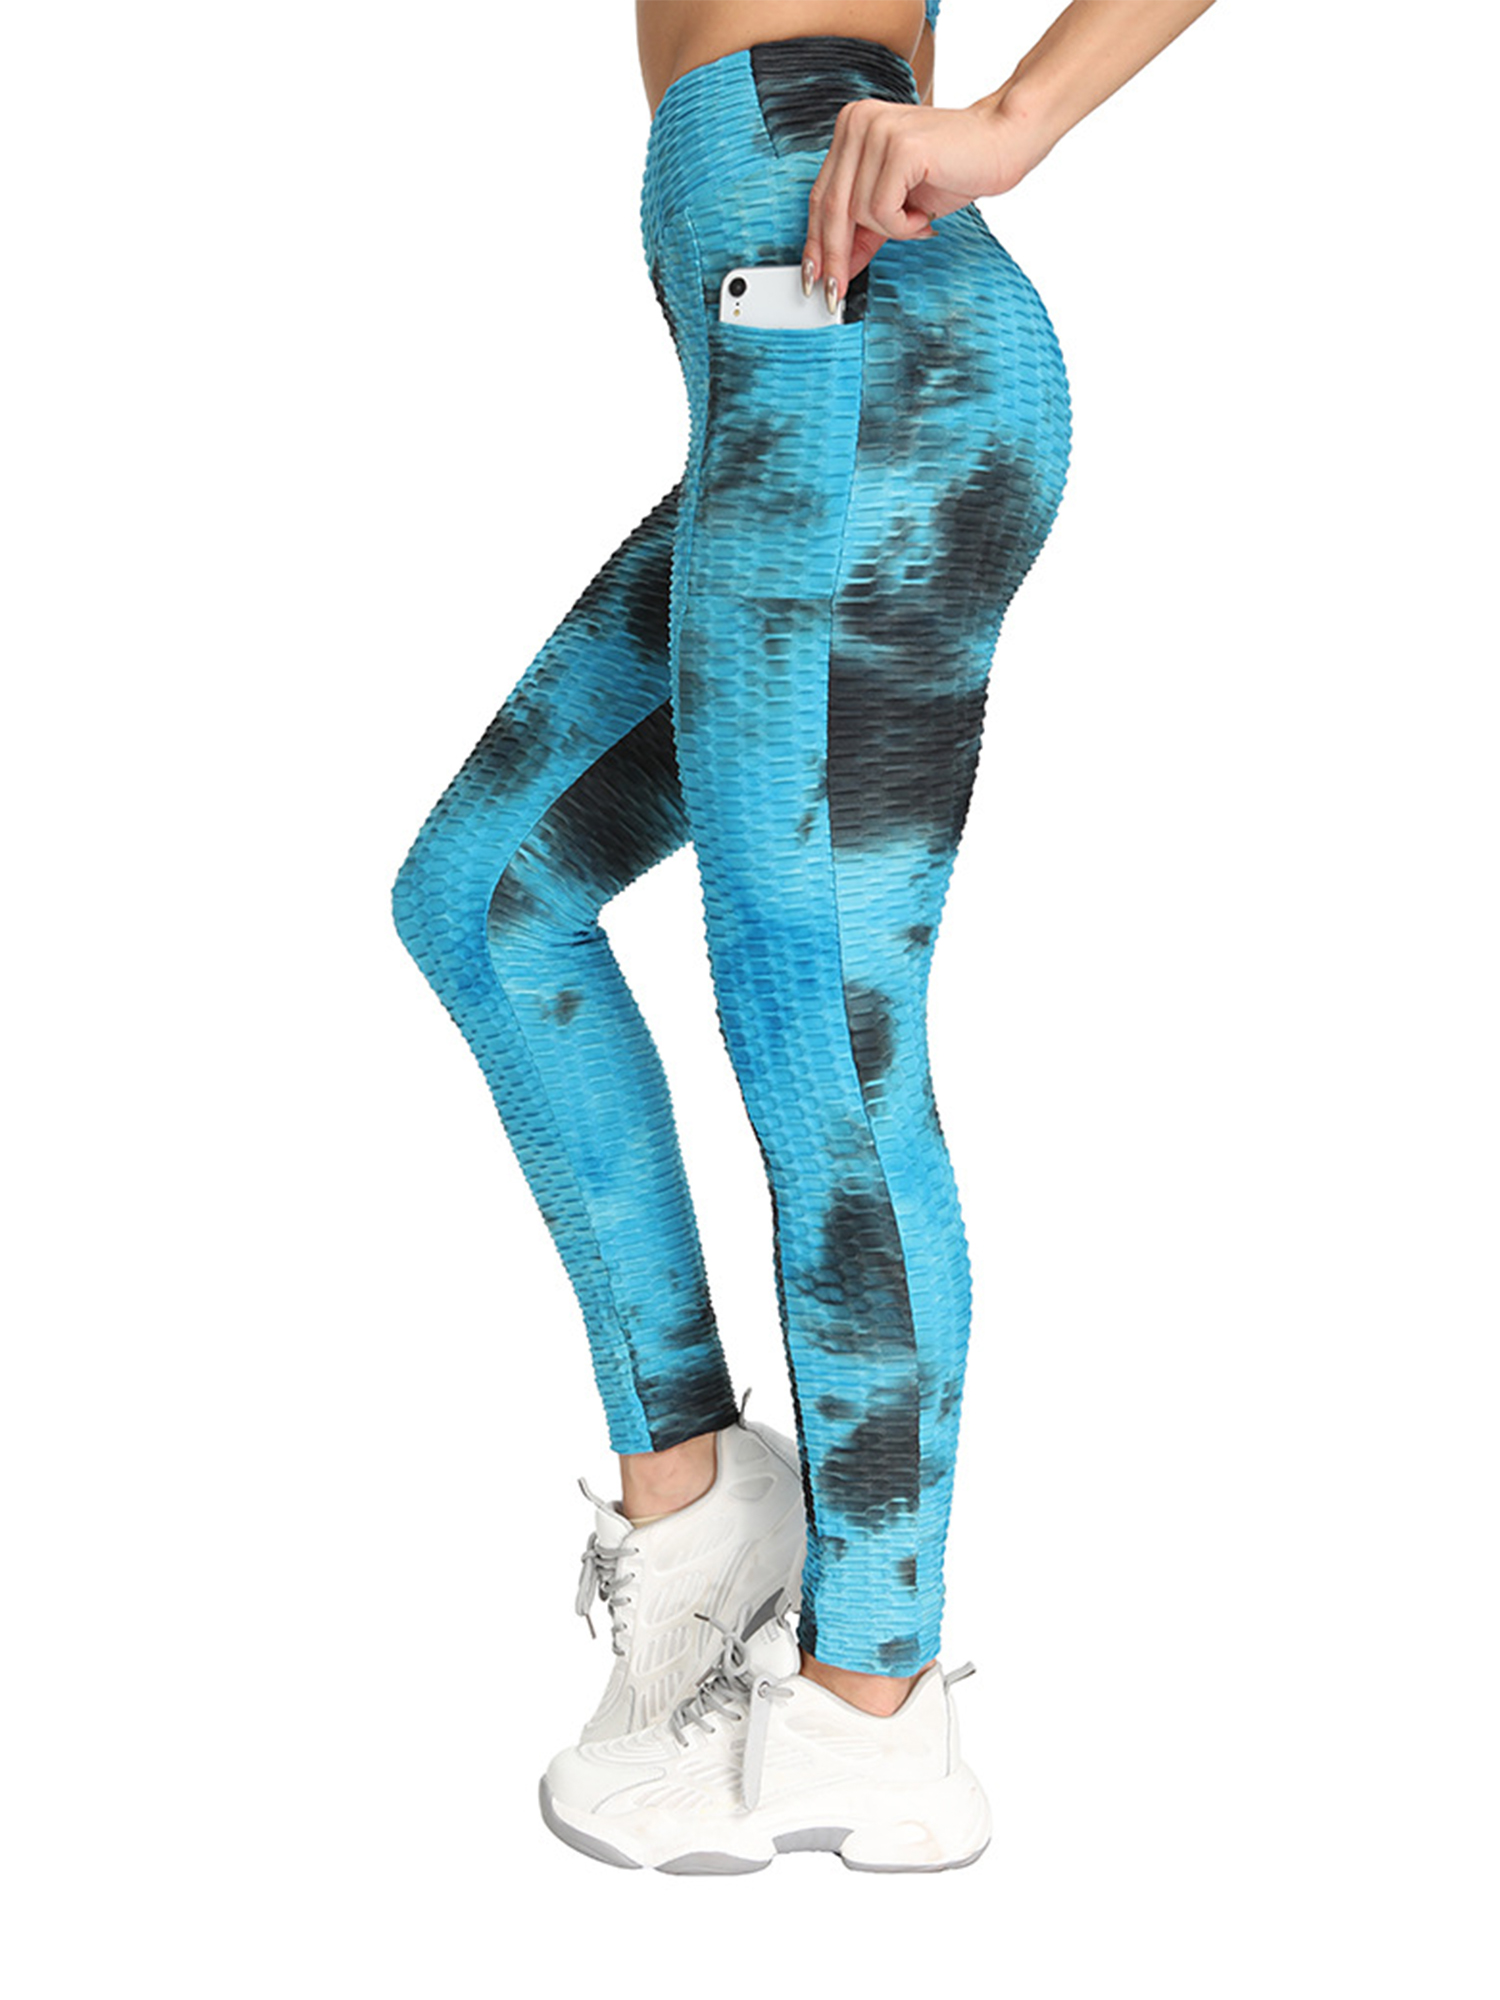 High Waist Leggings Turquoise Tie Dye Workout Leggings Yoga Leggings Gym Leggings Patterned Leggings